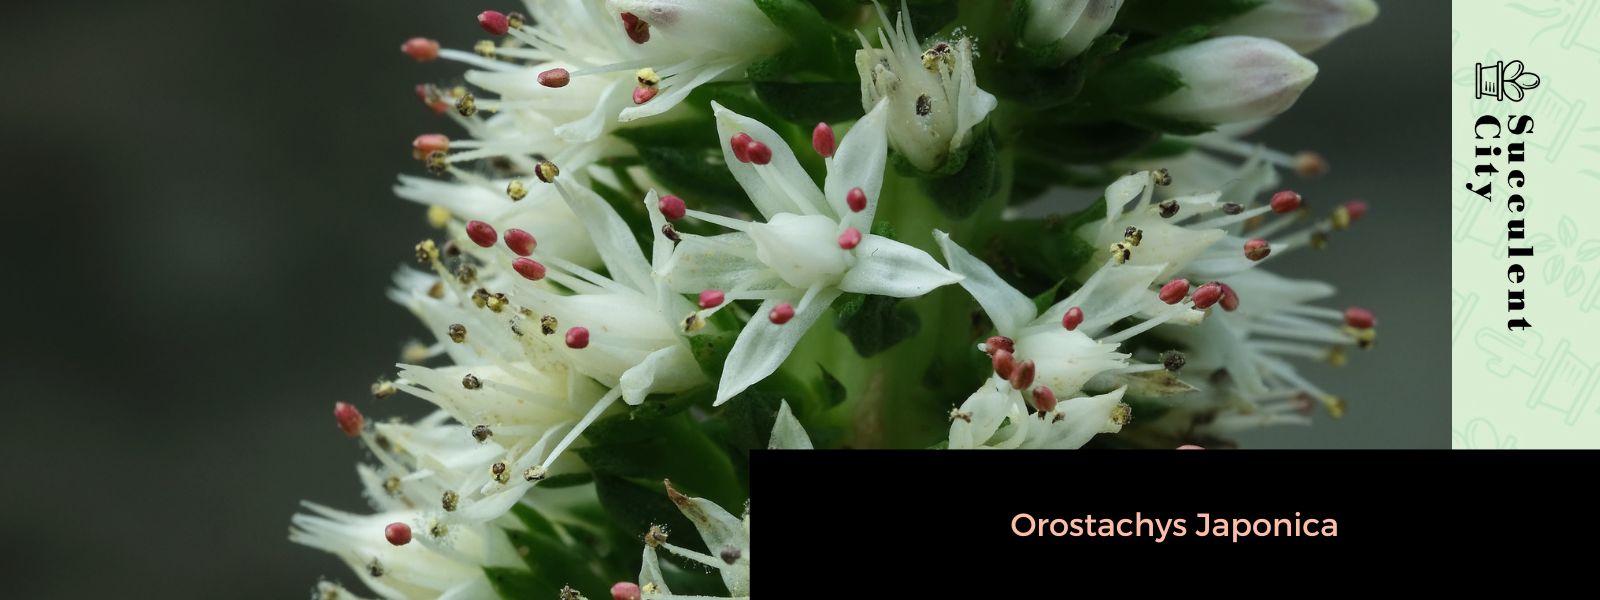 Orostachys Japonica (La “suculenta tonta japonesa”)